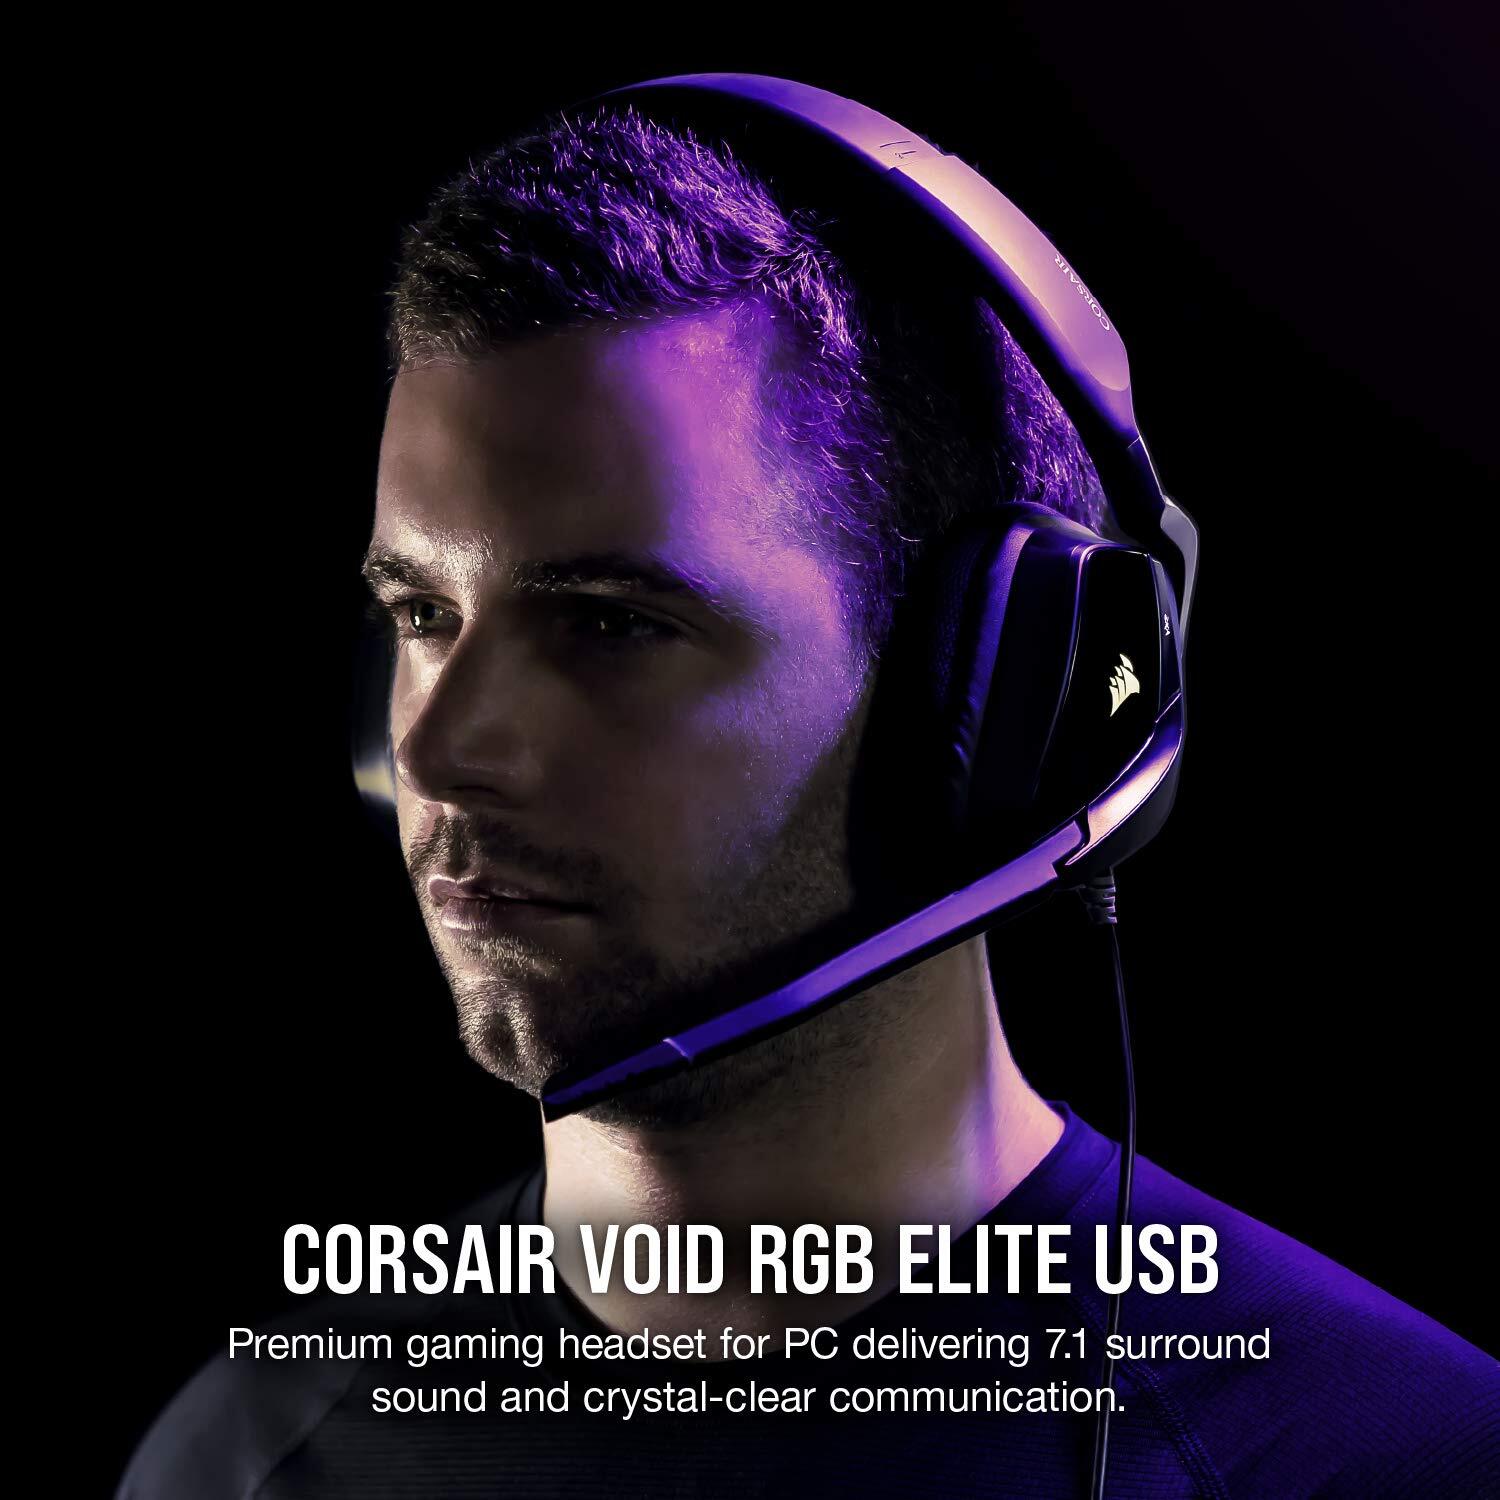 Corsair Void RGB Elite USB Premium Gaming Headset with 7.1 Surround Sound, Carbon